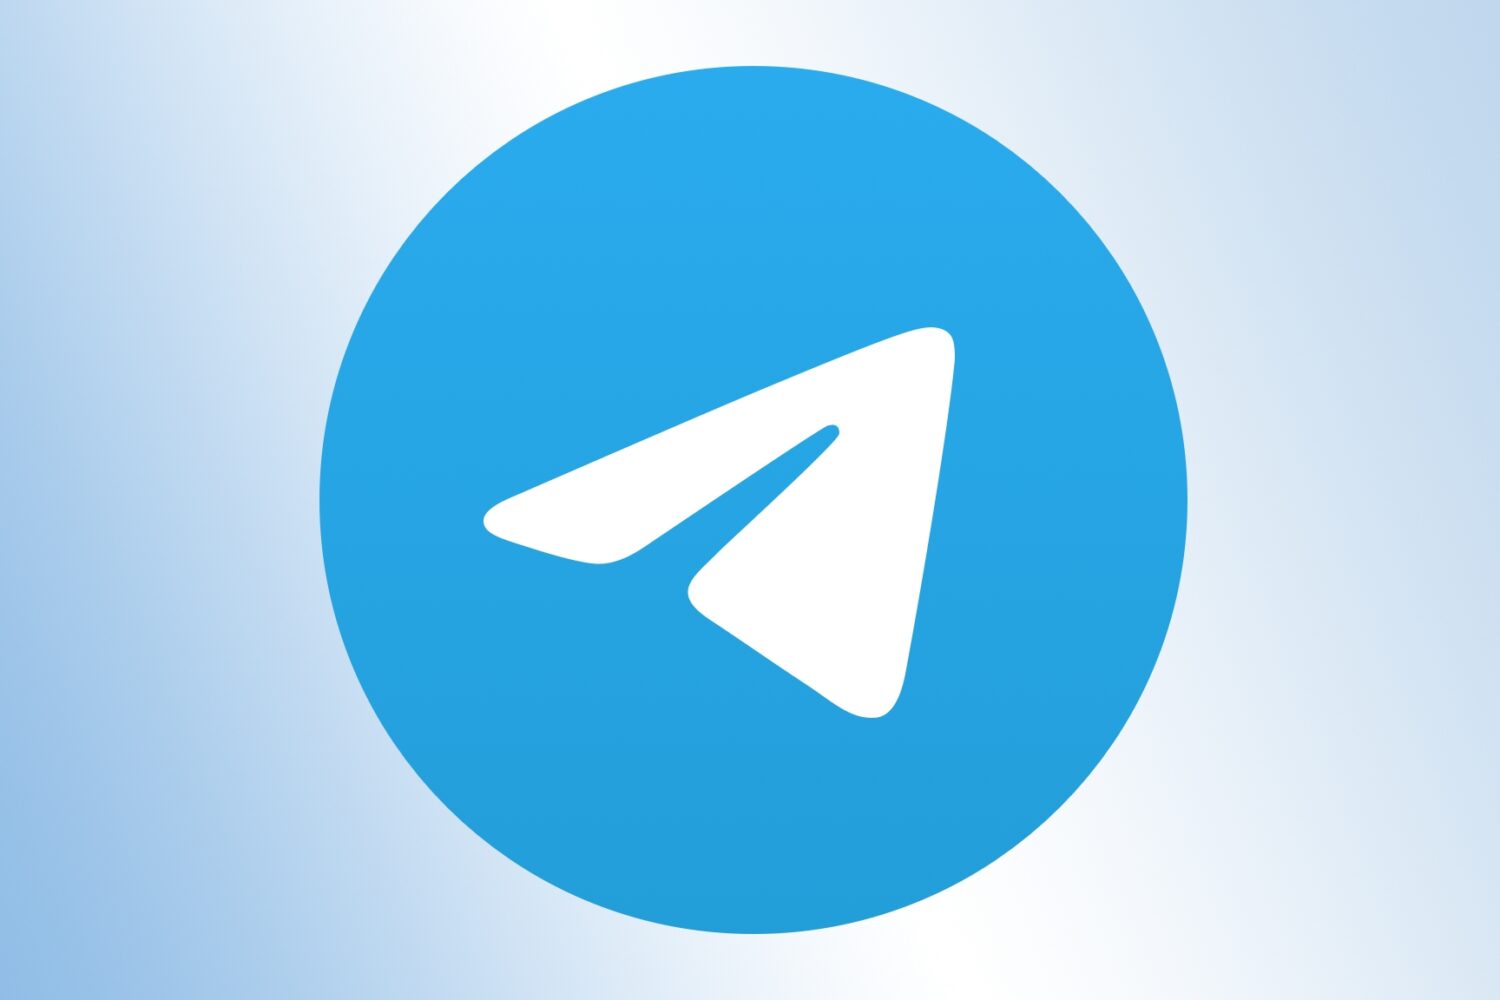 Telegram logo set against a light blue gradient background